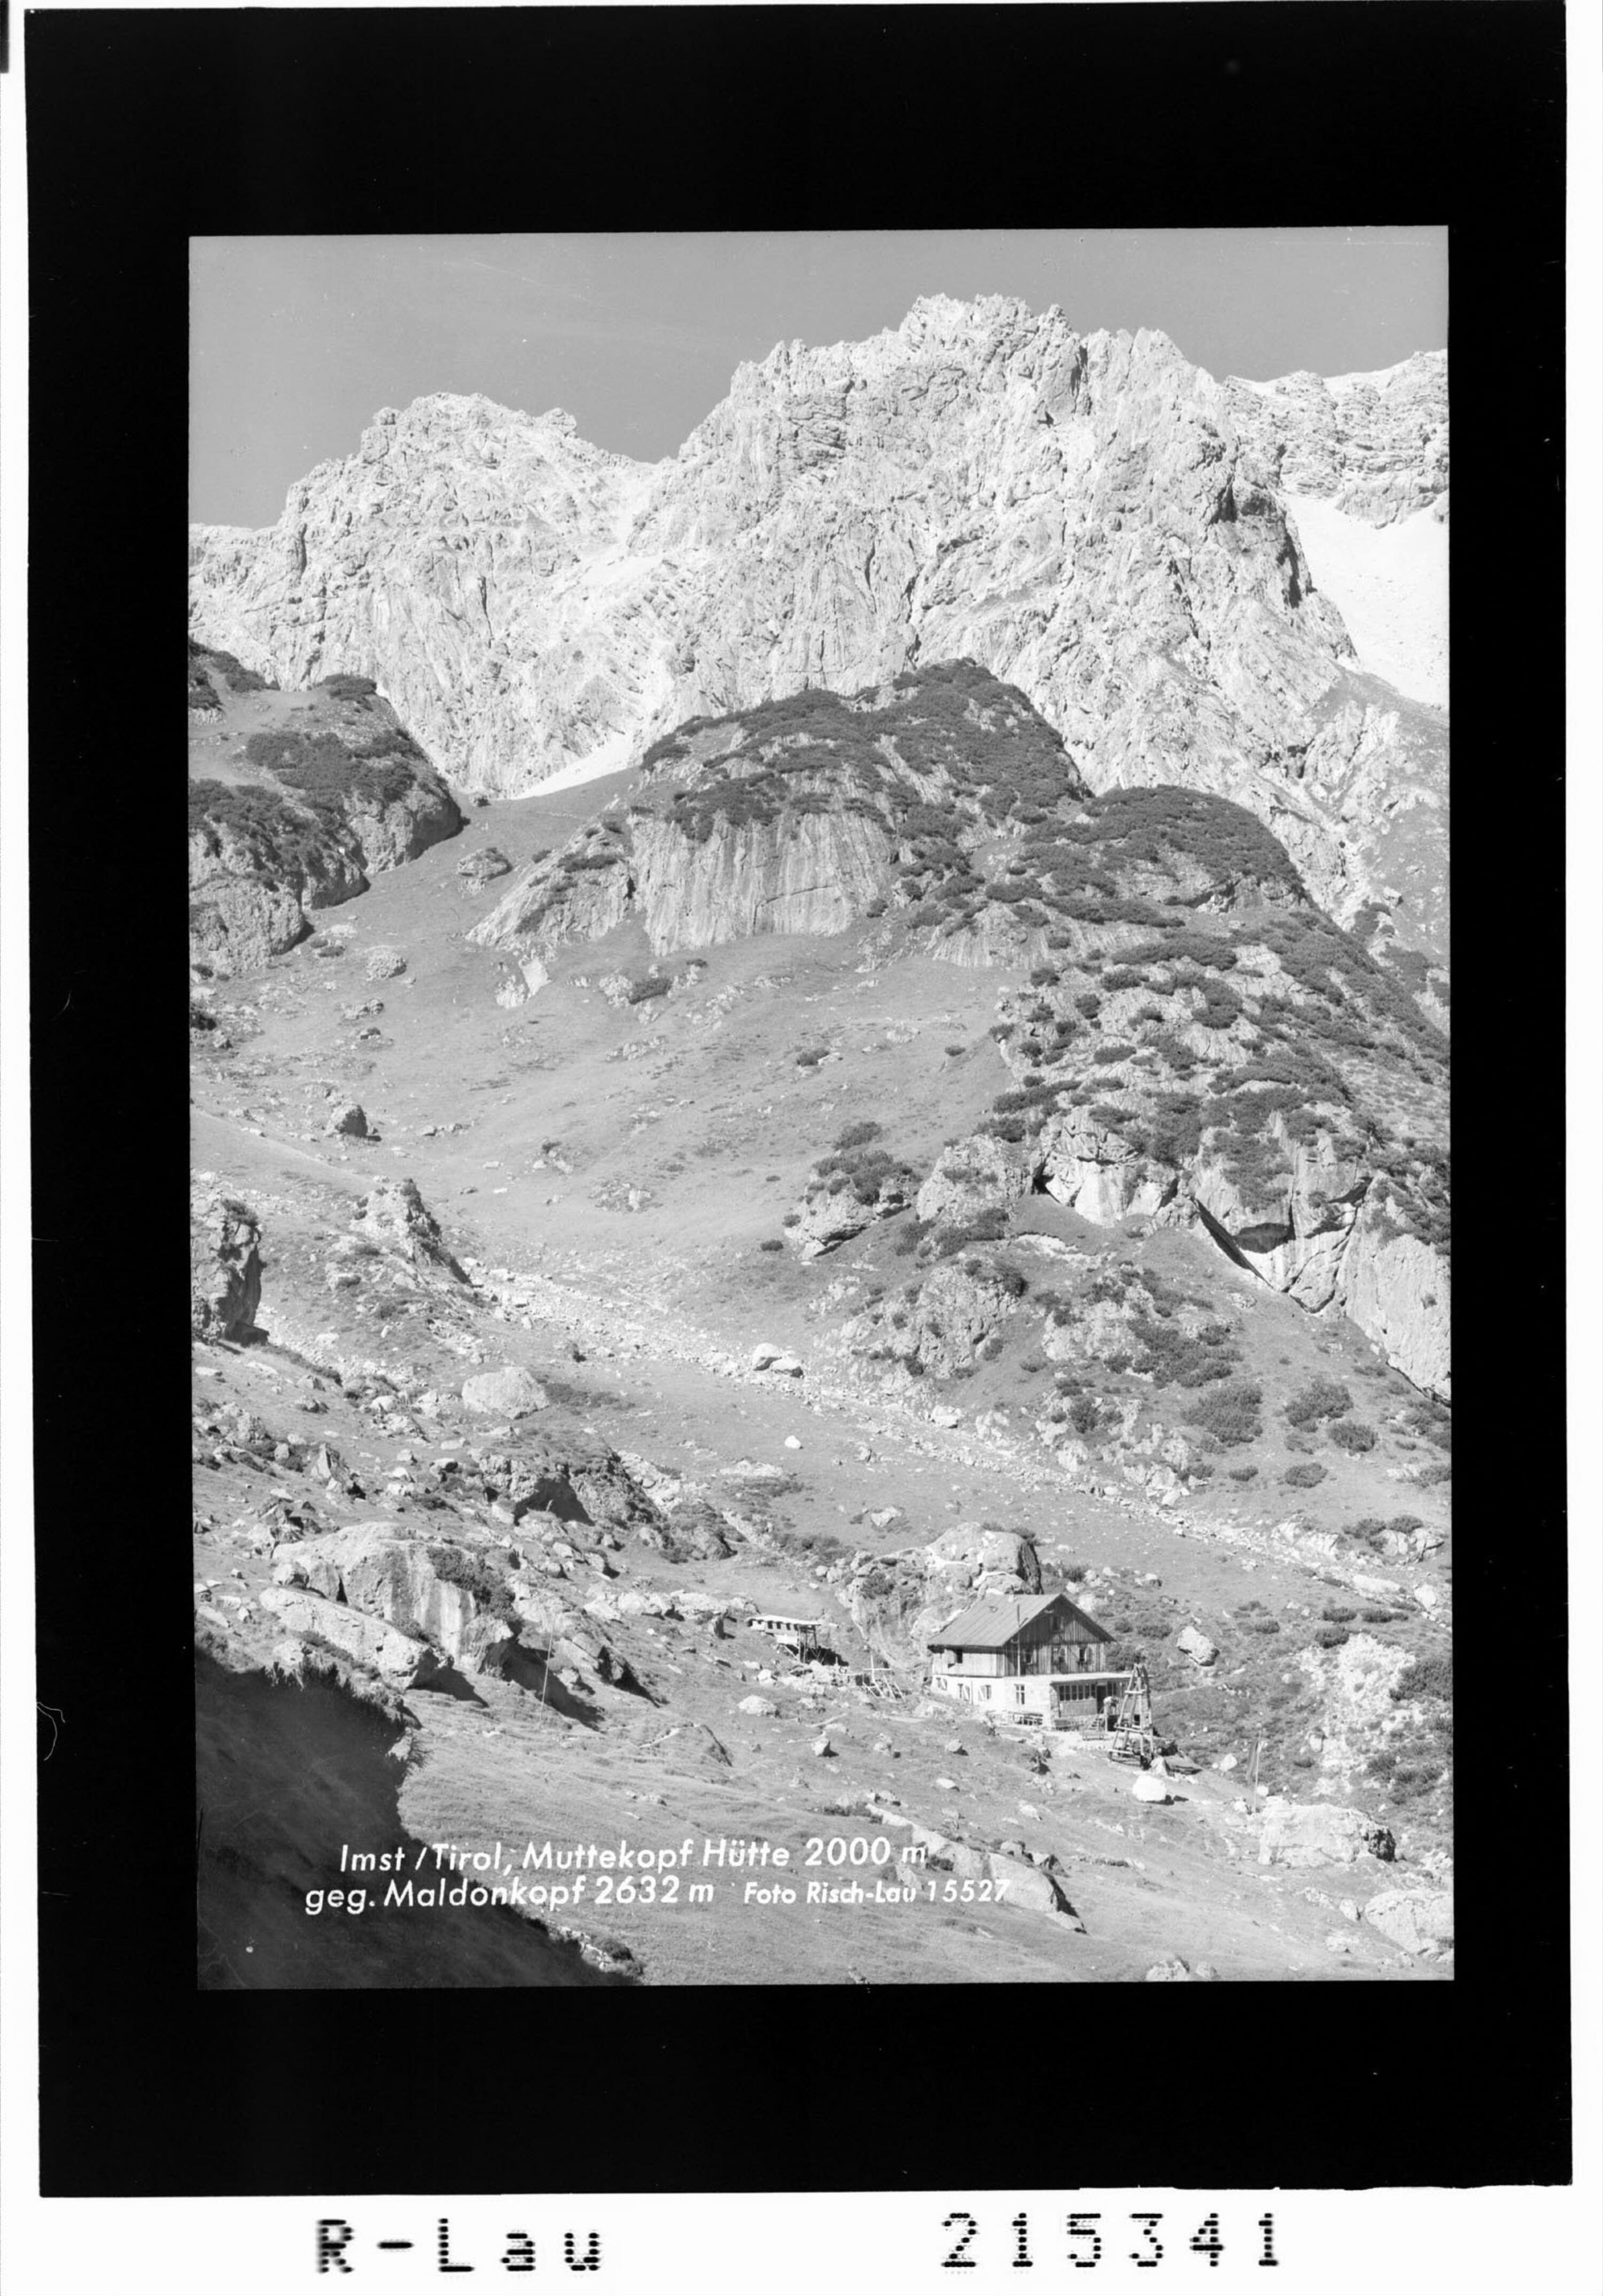 Imst / Tirol / Muttekopf Hütte 2000 m gegen Maldonkopf 2632 m></div>


    <hr>
    <div class=